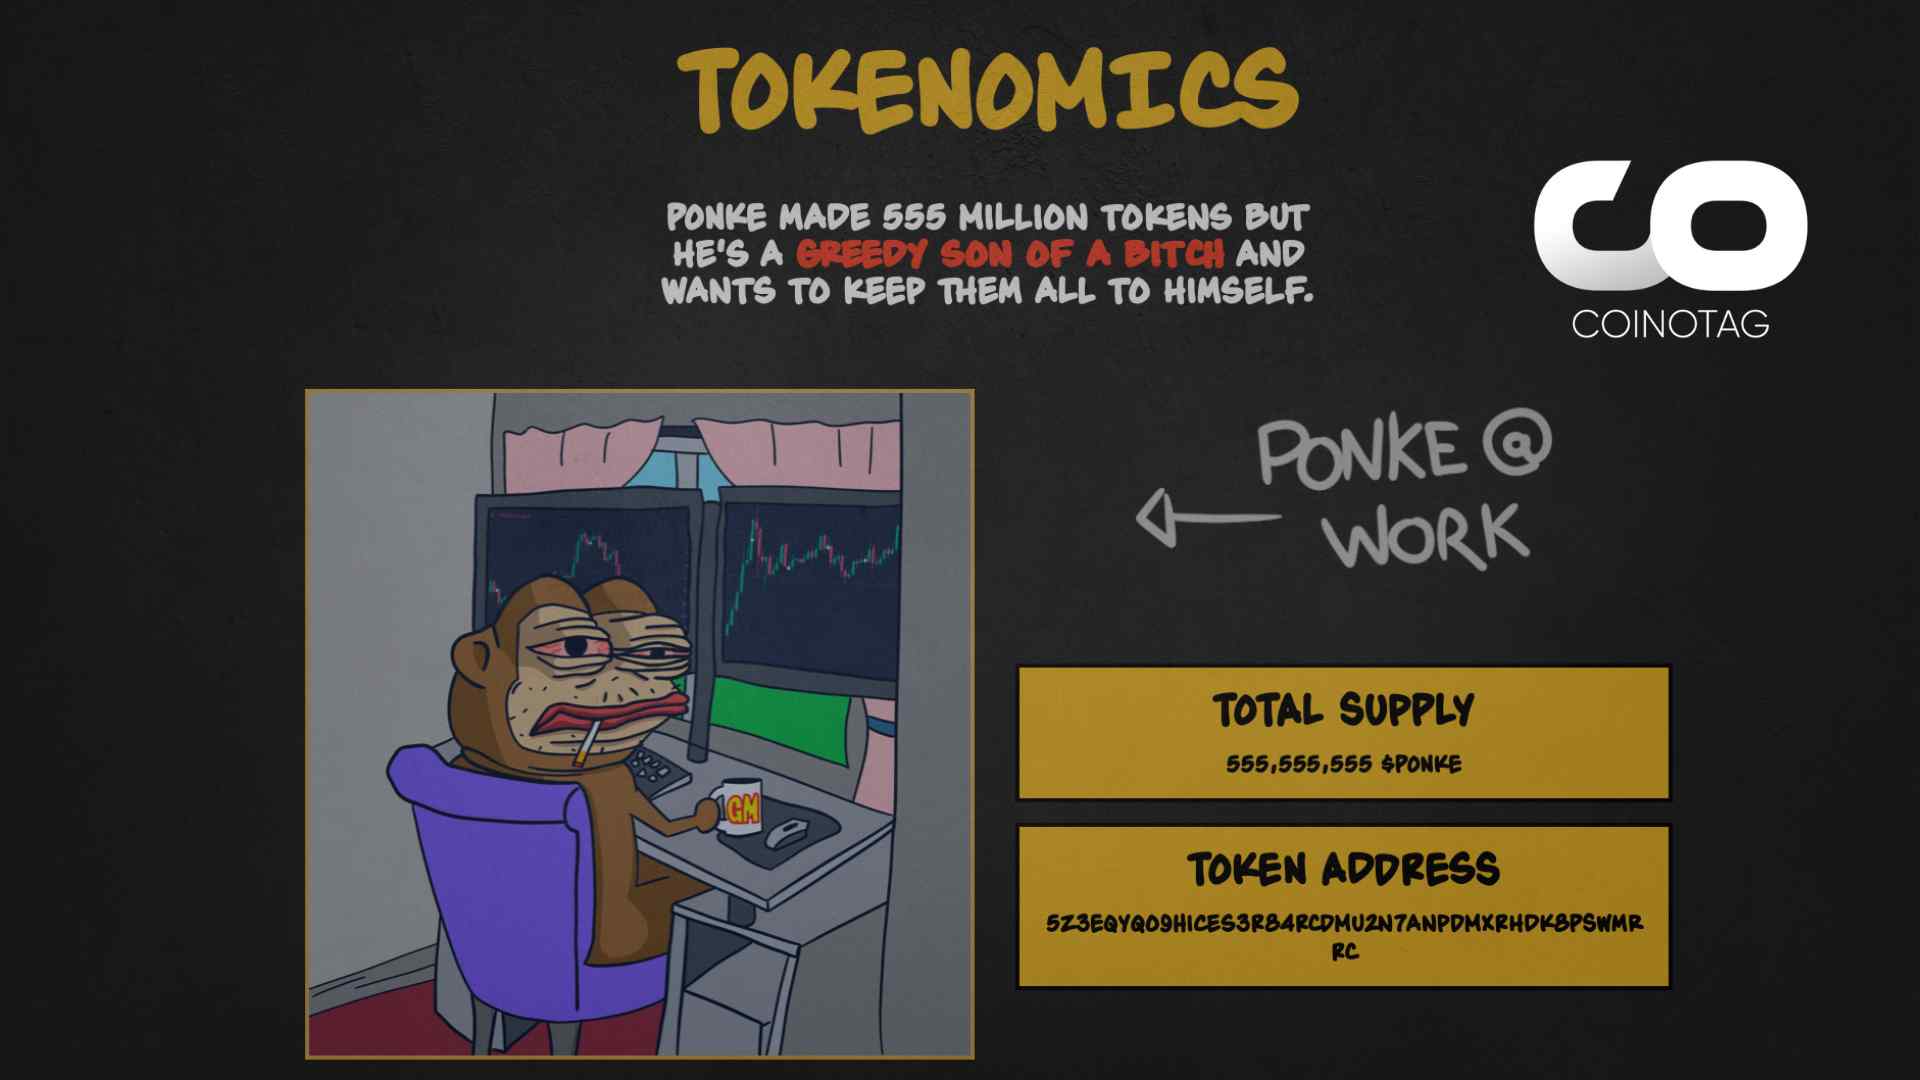 PONKE Tokenomics